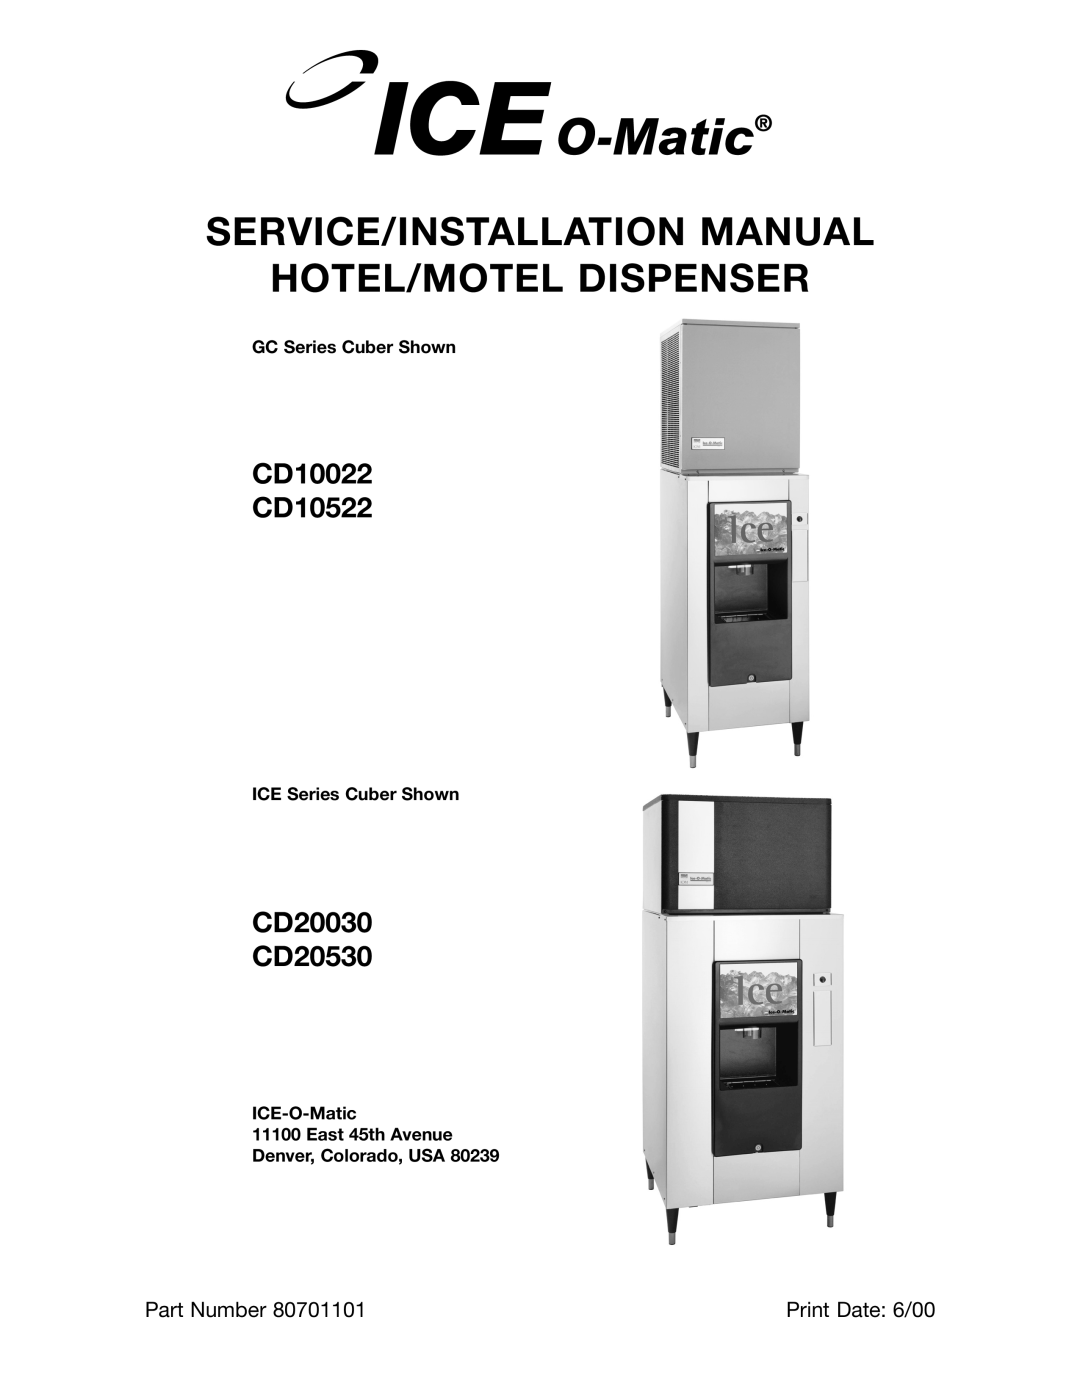 Ice-O-Matic CD20030 CD20530 installation manual Service/Installation Manual Hotel/Motel Dispenser, CD10022 CD10522 